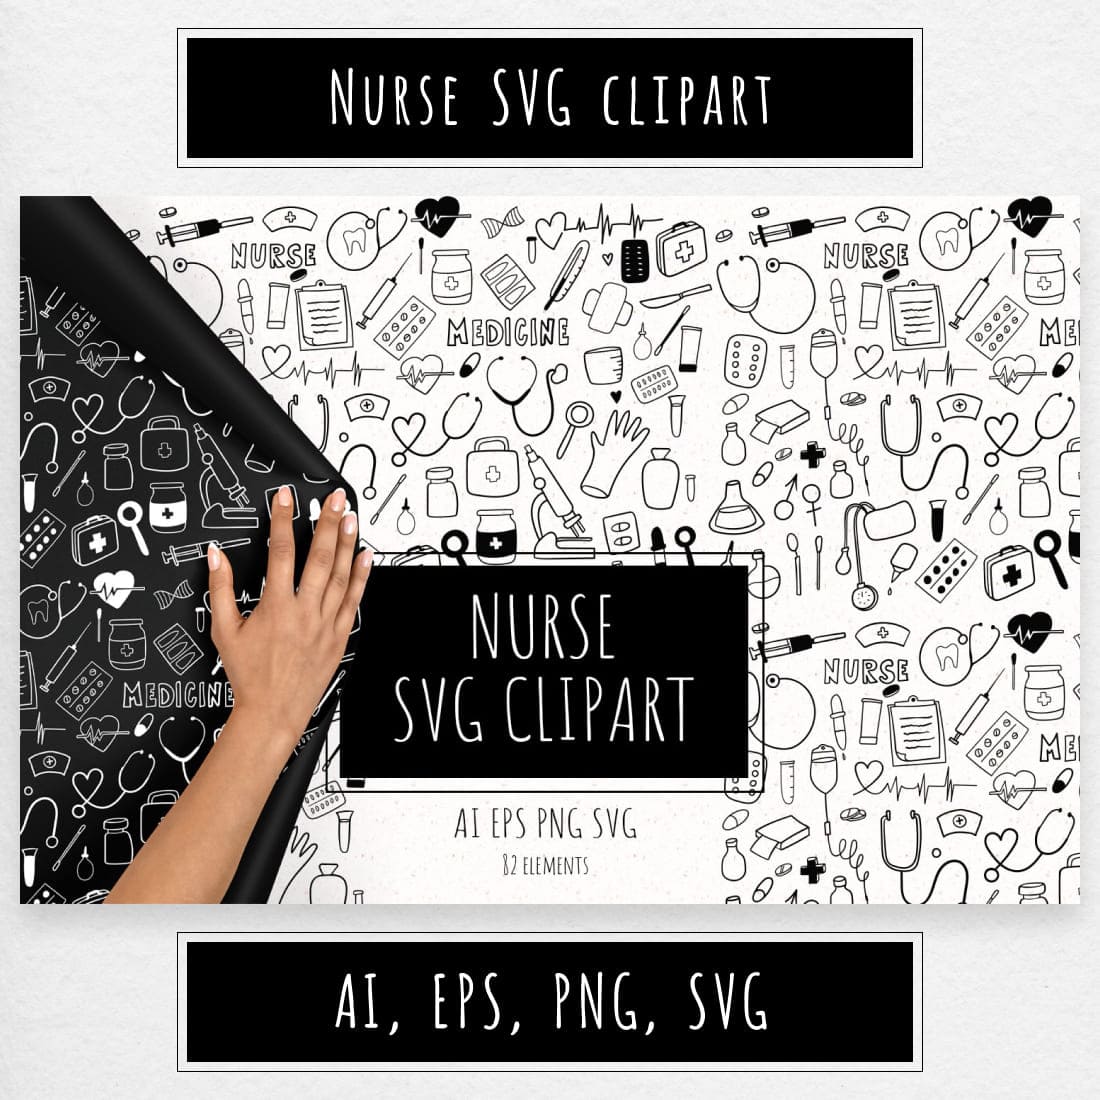 Nurse SVG clipart main cover.